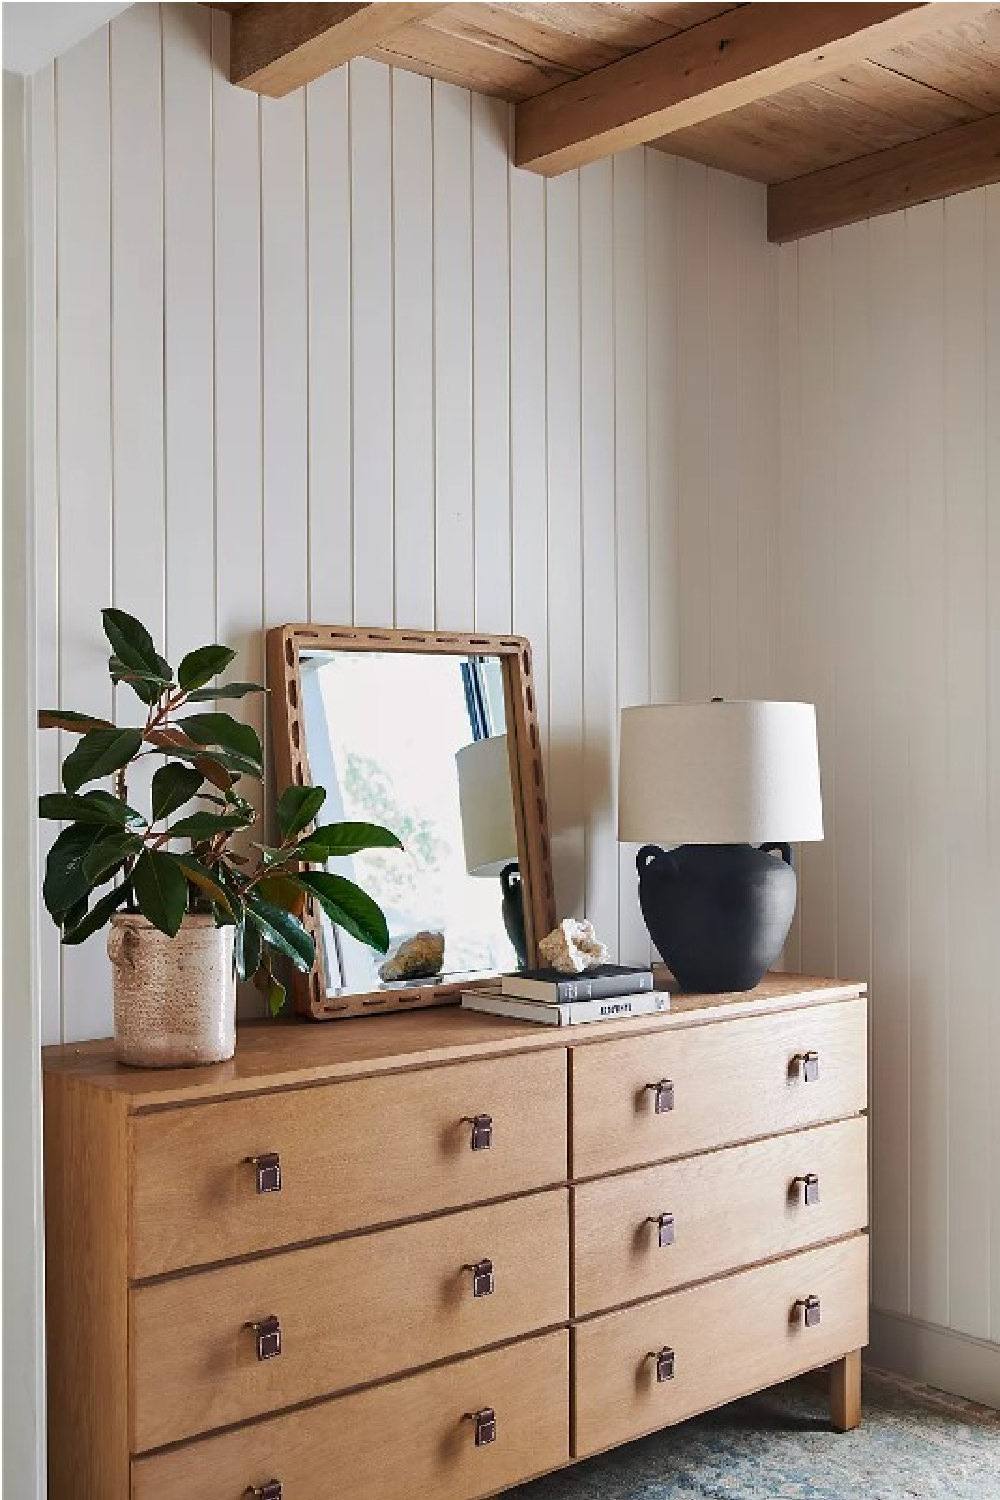 Amber Lewis designed bedroom dresser, mirror, and lamp - Anthropologie. #bedroomdfurniture #amberlewis #laidbackluxe